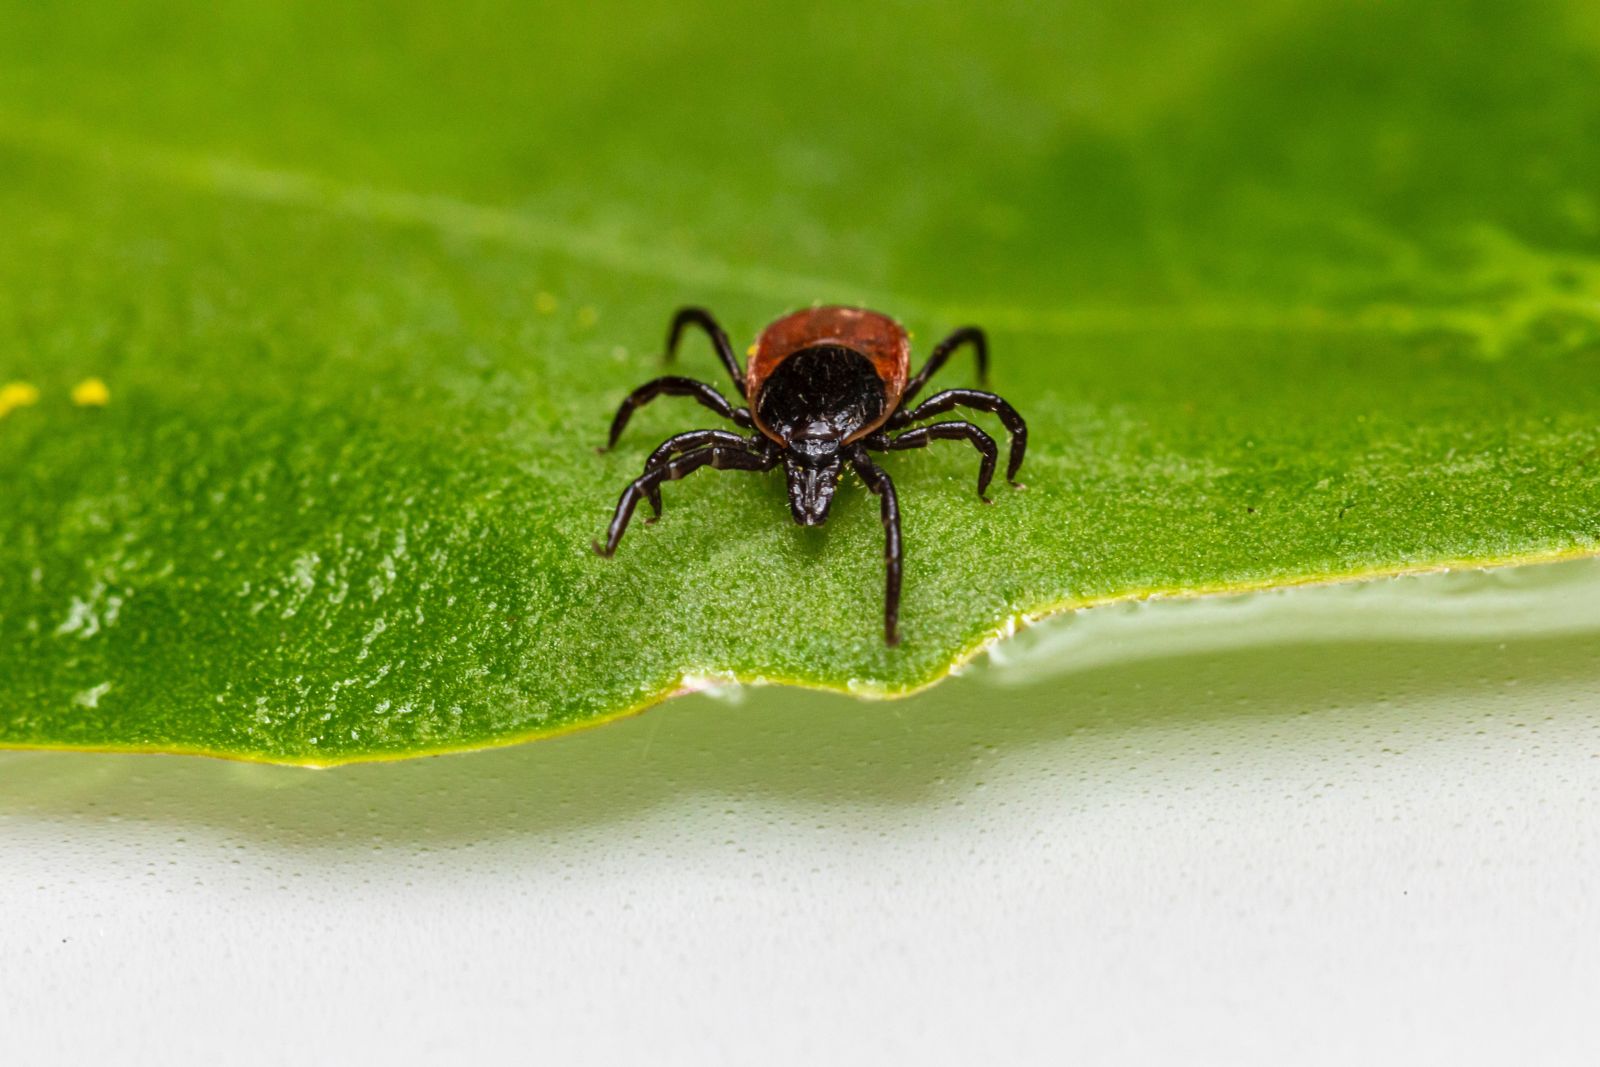 A Tick facing forwards on a leaf